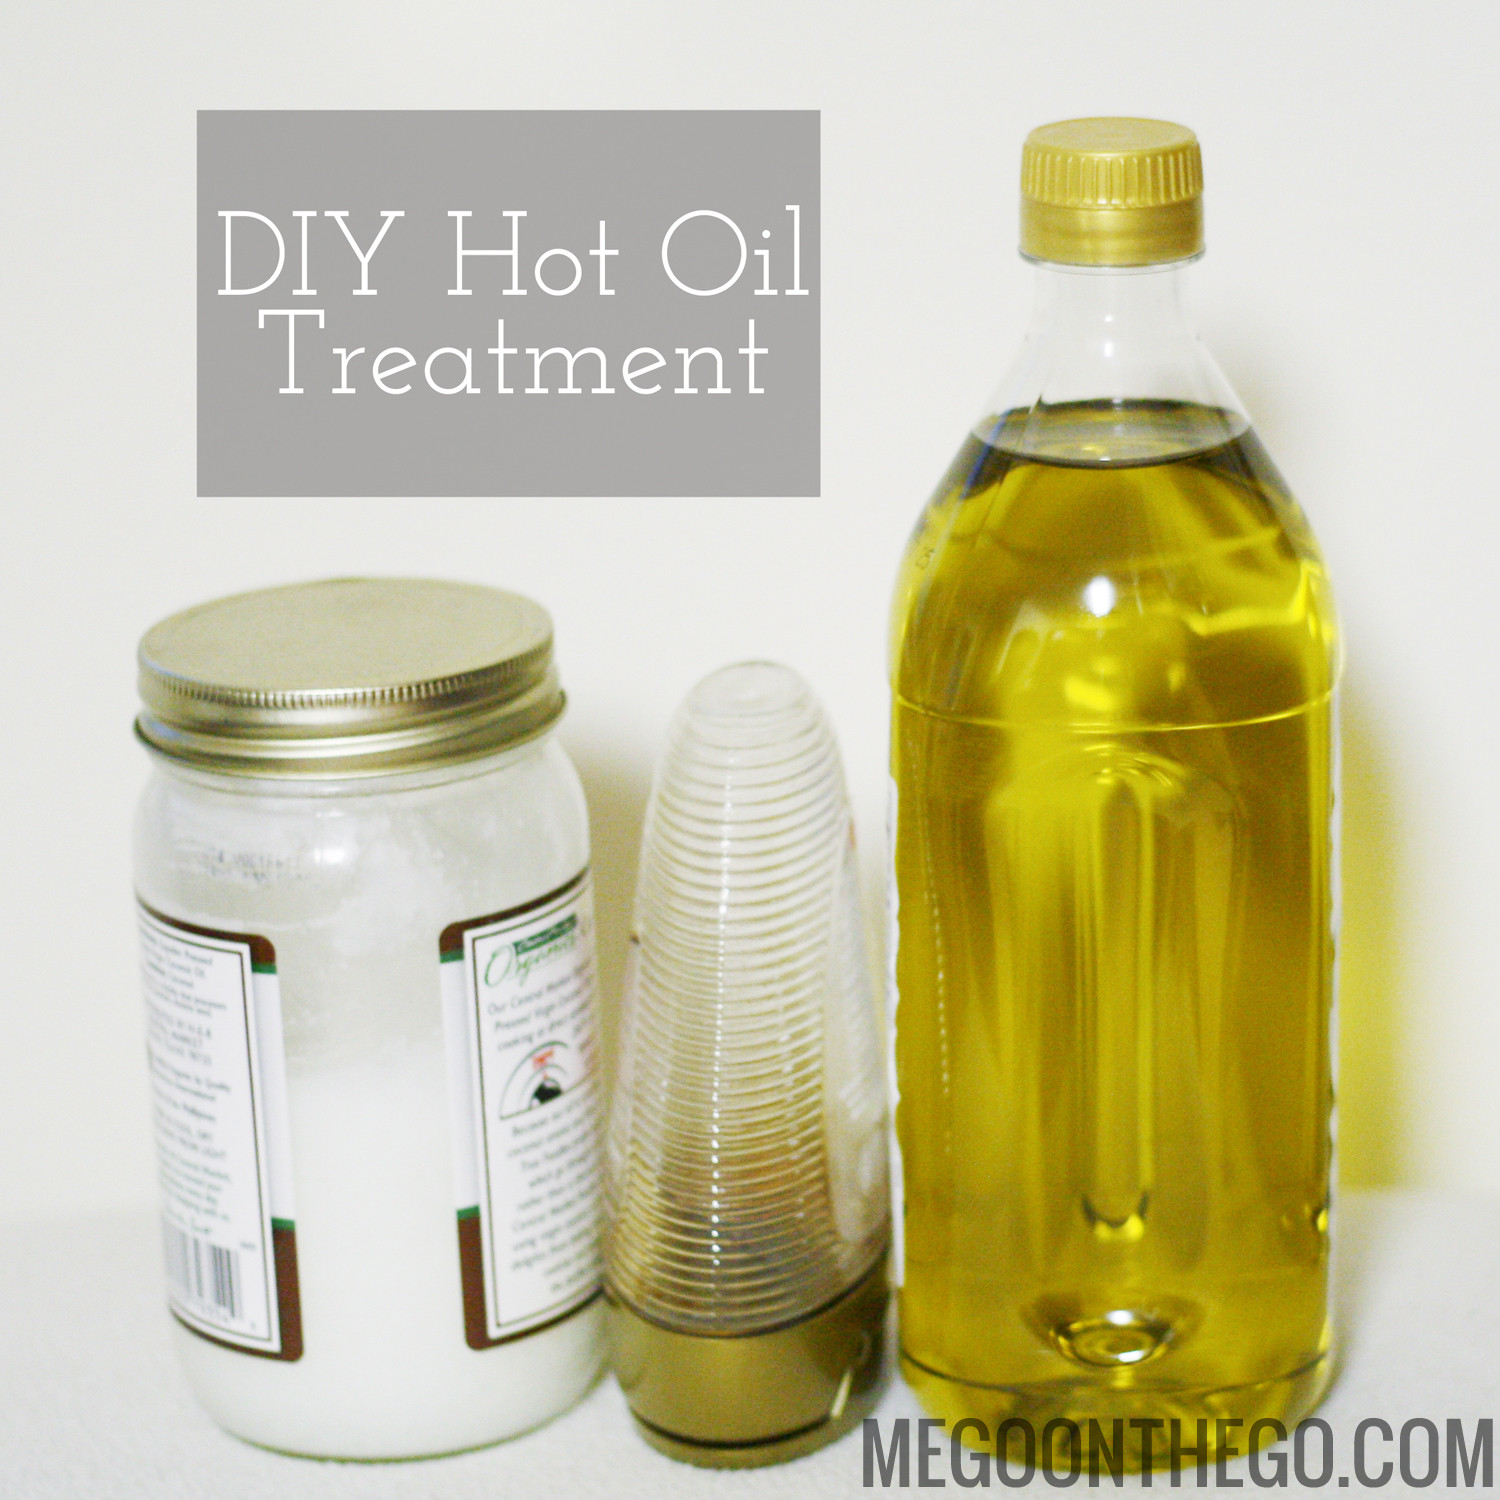 Hot Oil Hair Treatment DIY
 DIY Hot Oil Treatment